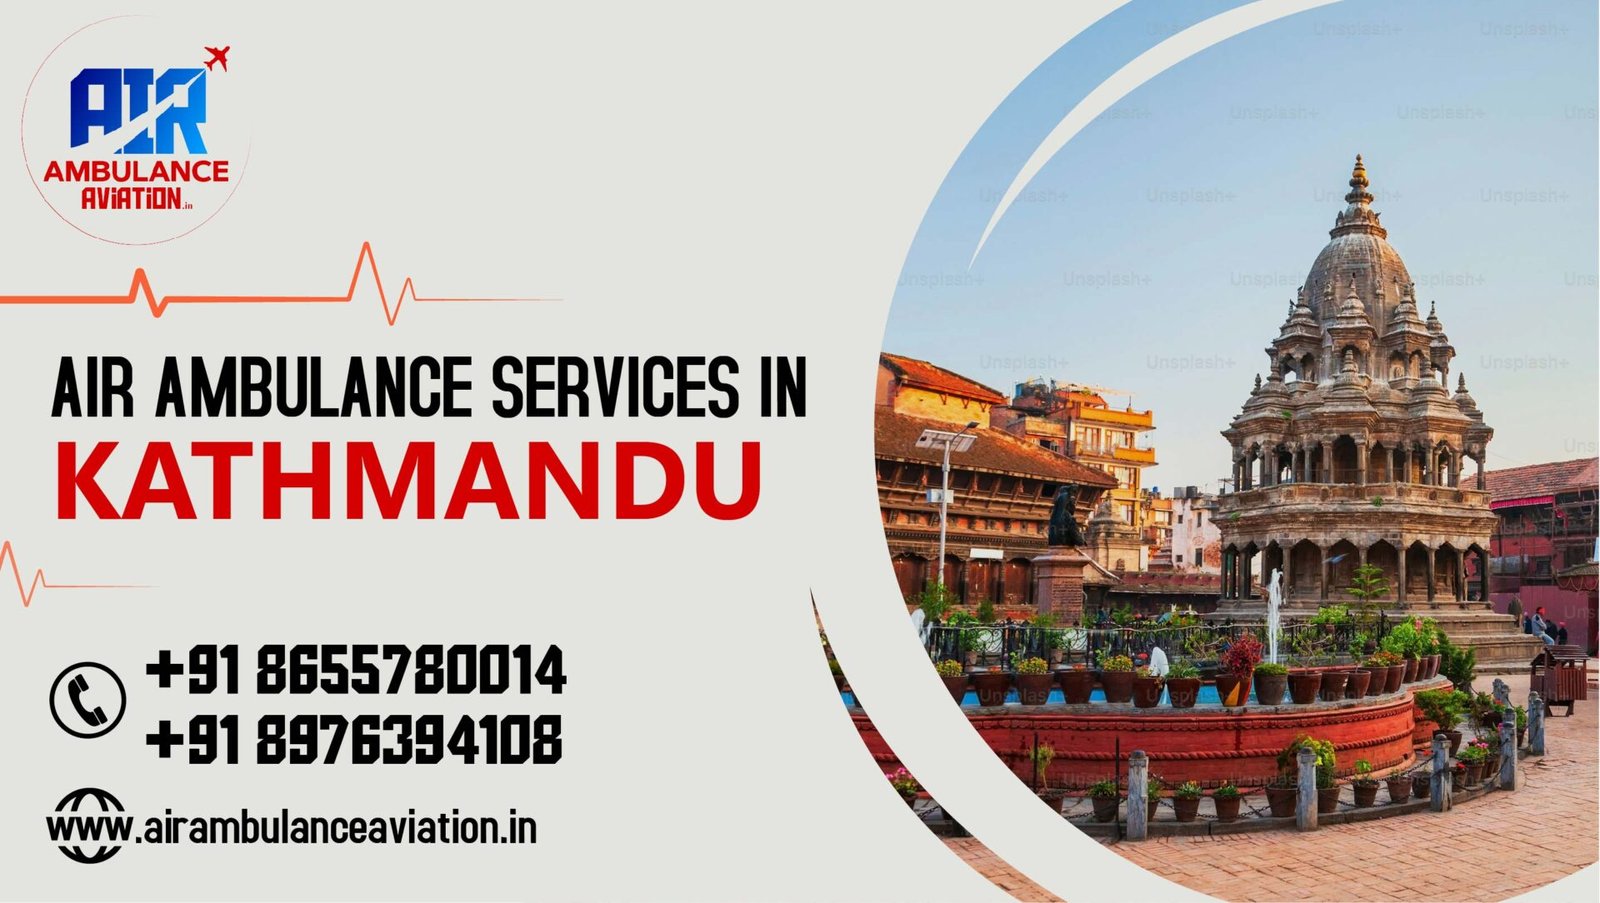 Air Ambulance Services in Kathmandu